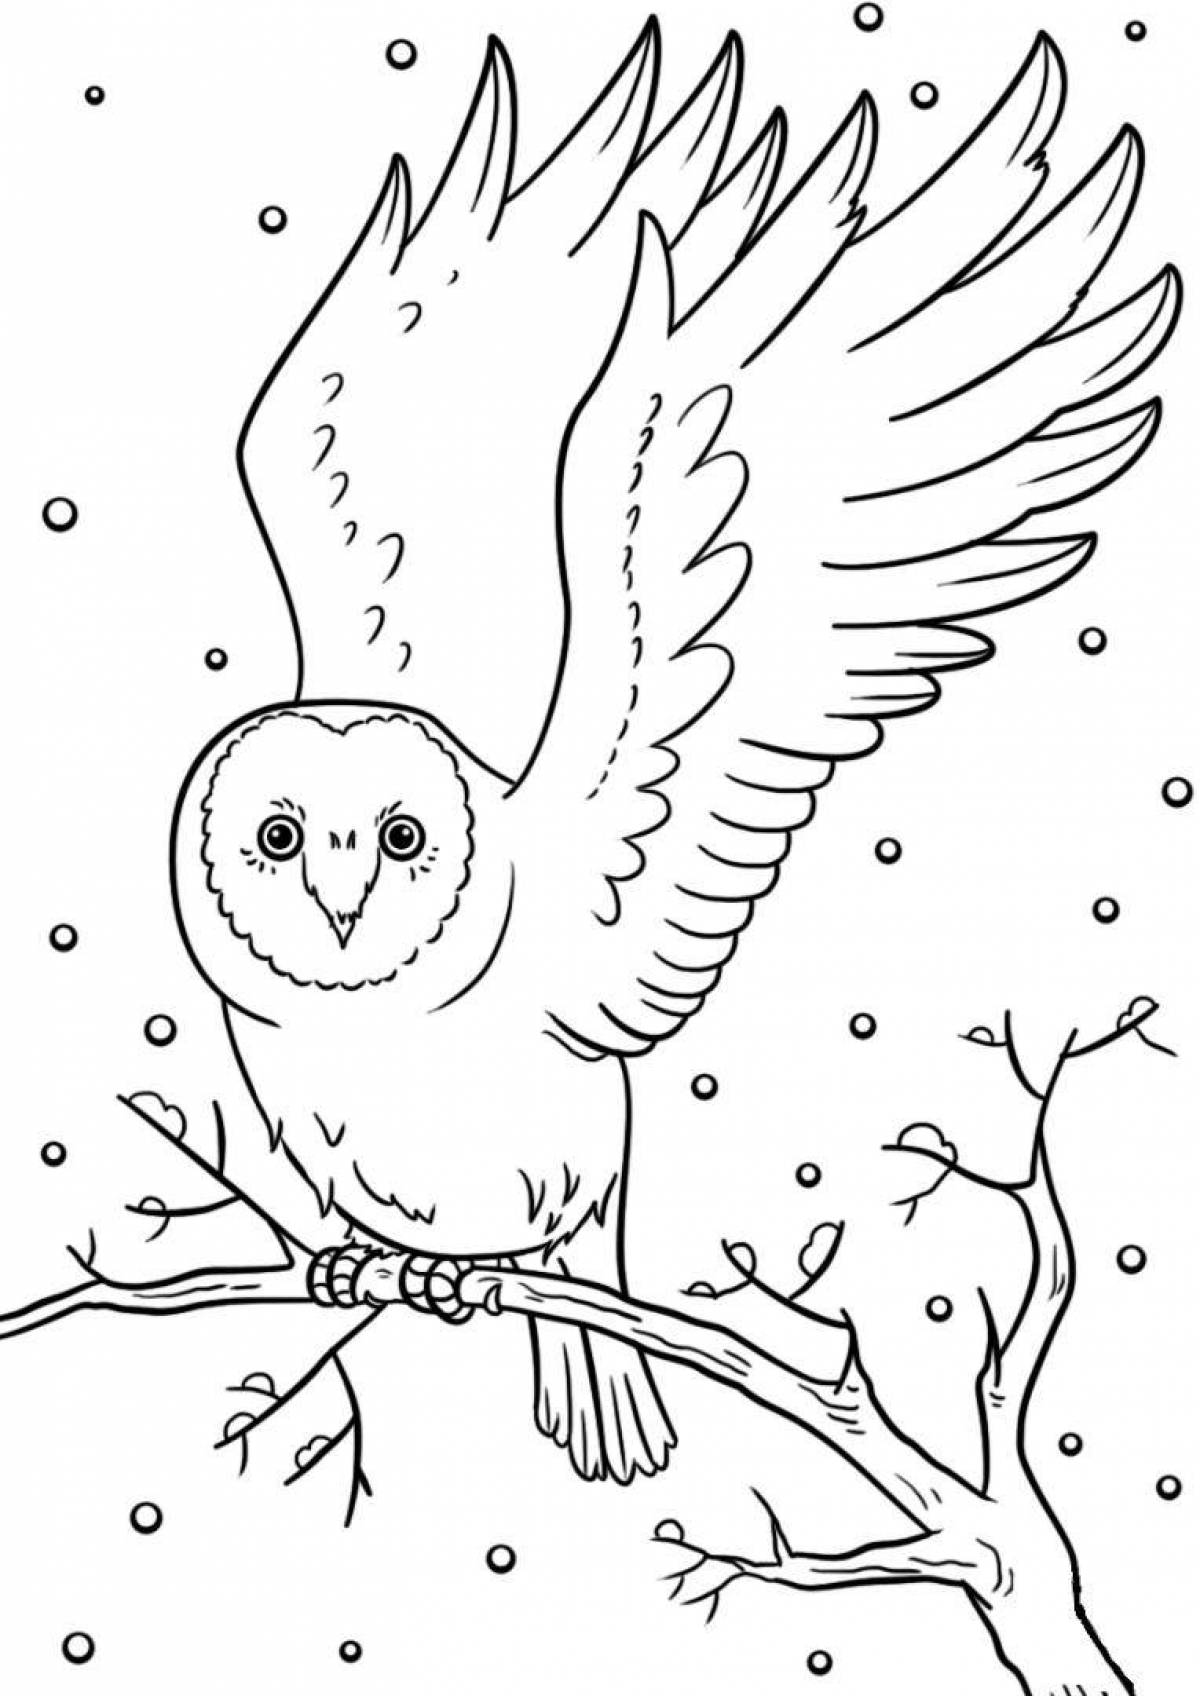 Coloring page funny wintering birds